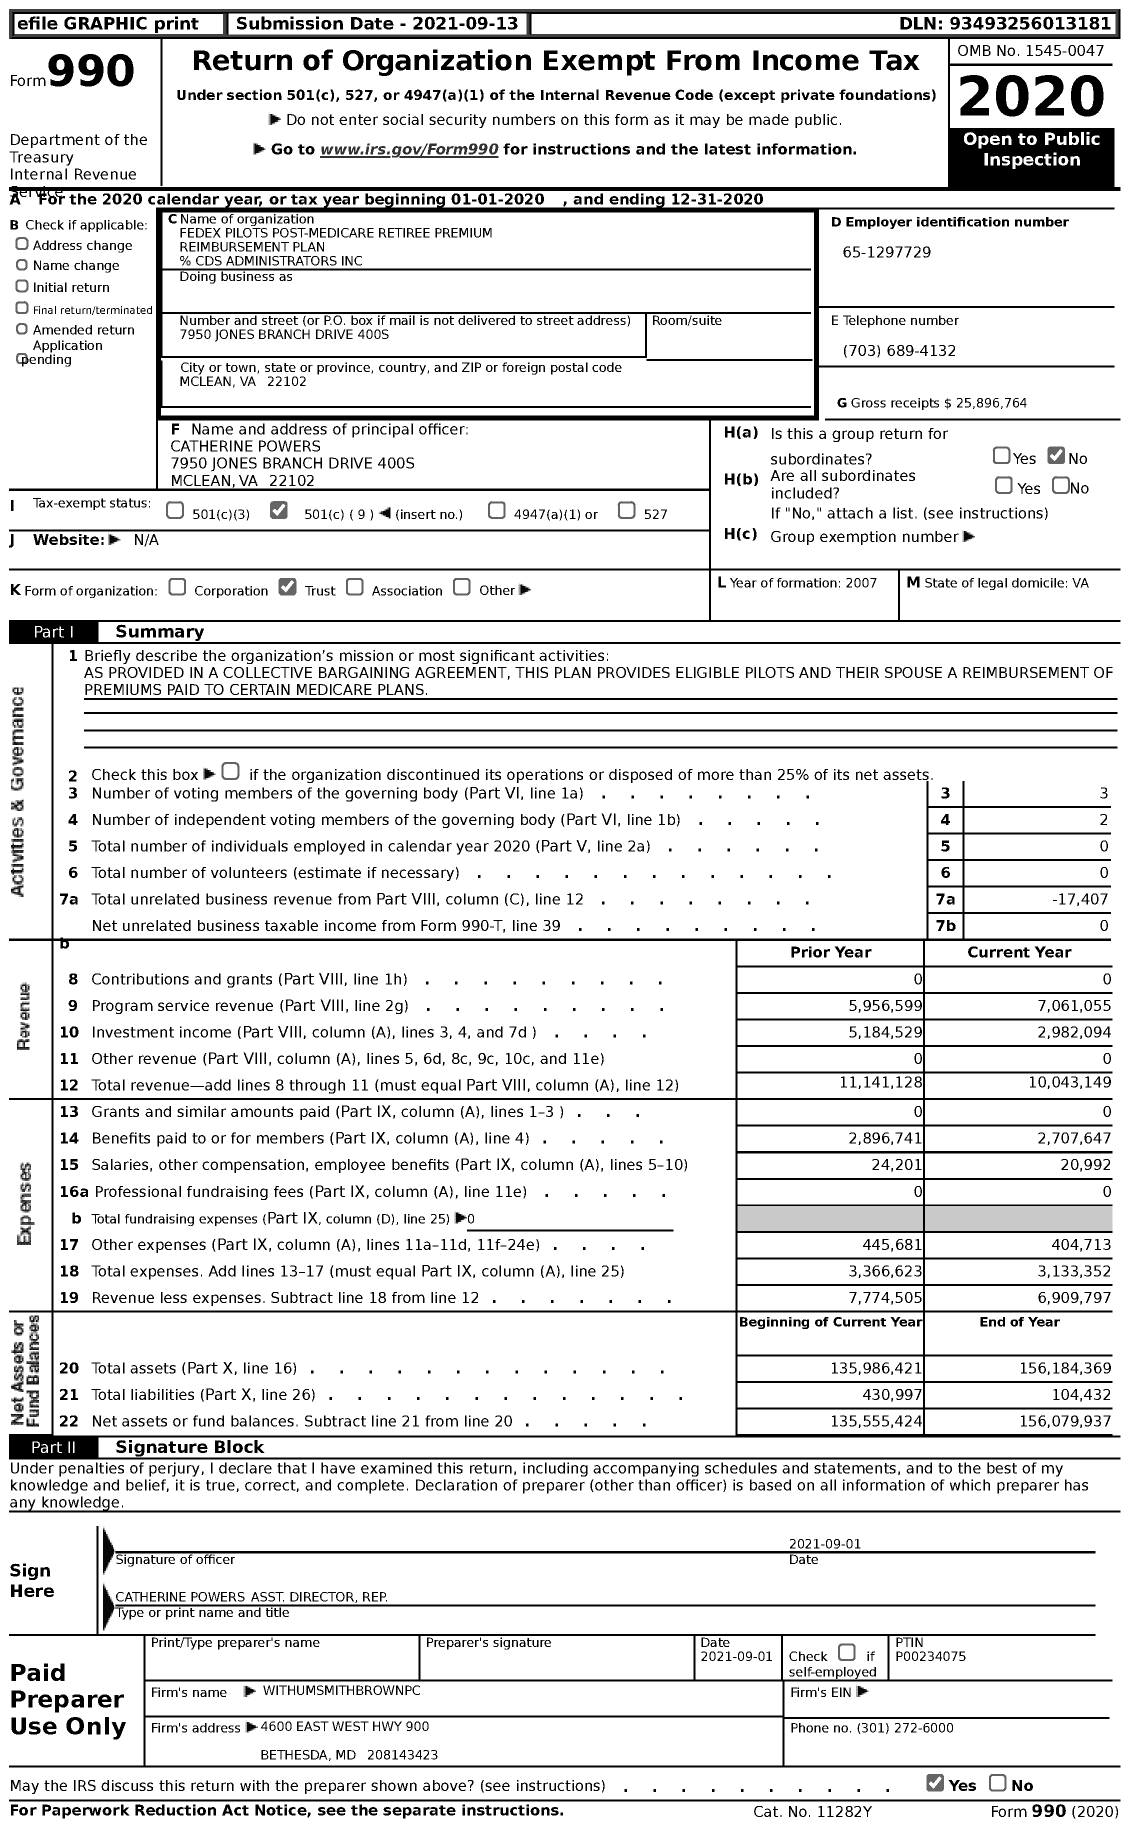 Image of first page of 2020 Form 990 for Fedex Pilots Post-Medicare Retiree Premium Reimbursement Plan